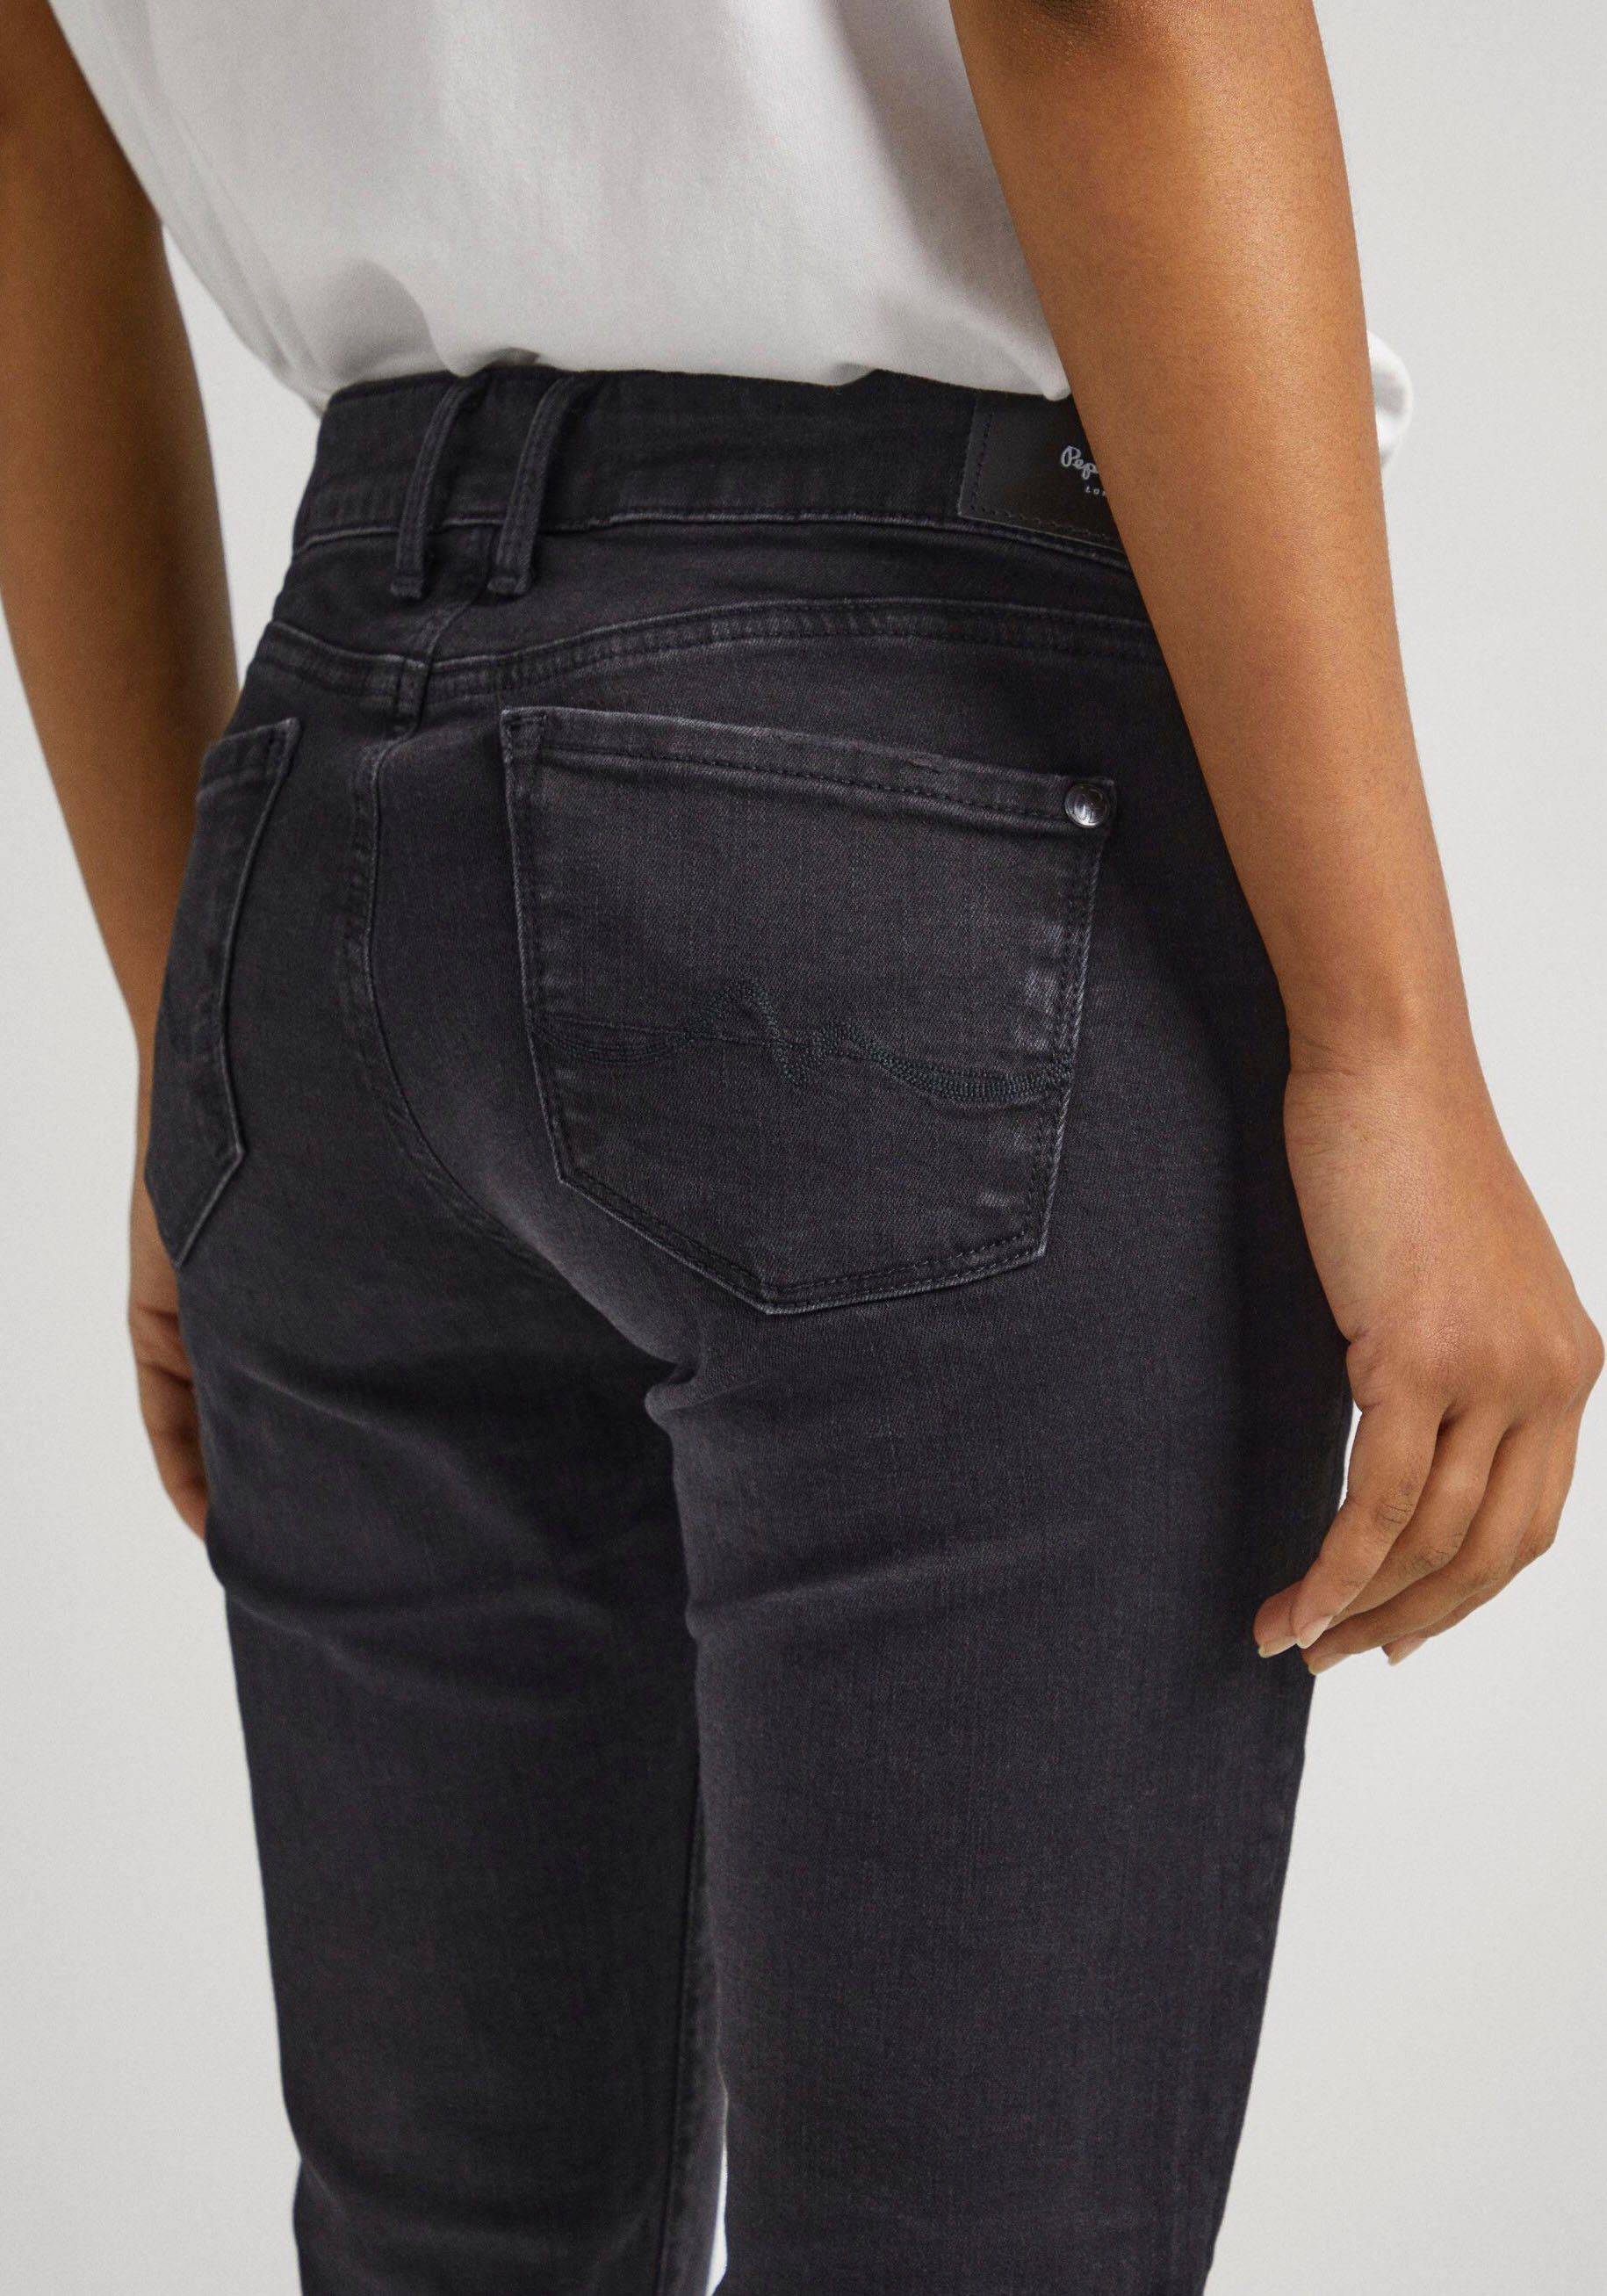 Pepe Jeans Skinny-fit-Jeans und black 5-Pocket-Stil Bund SOHO im 1-Knopf mit Stretch-Anteil